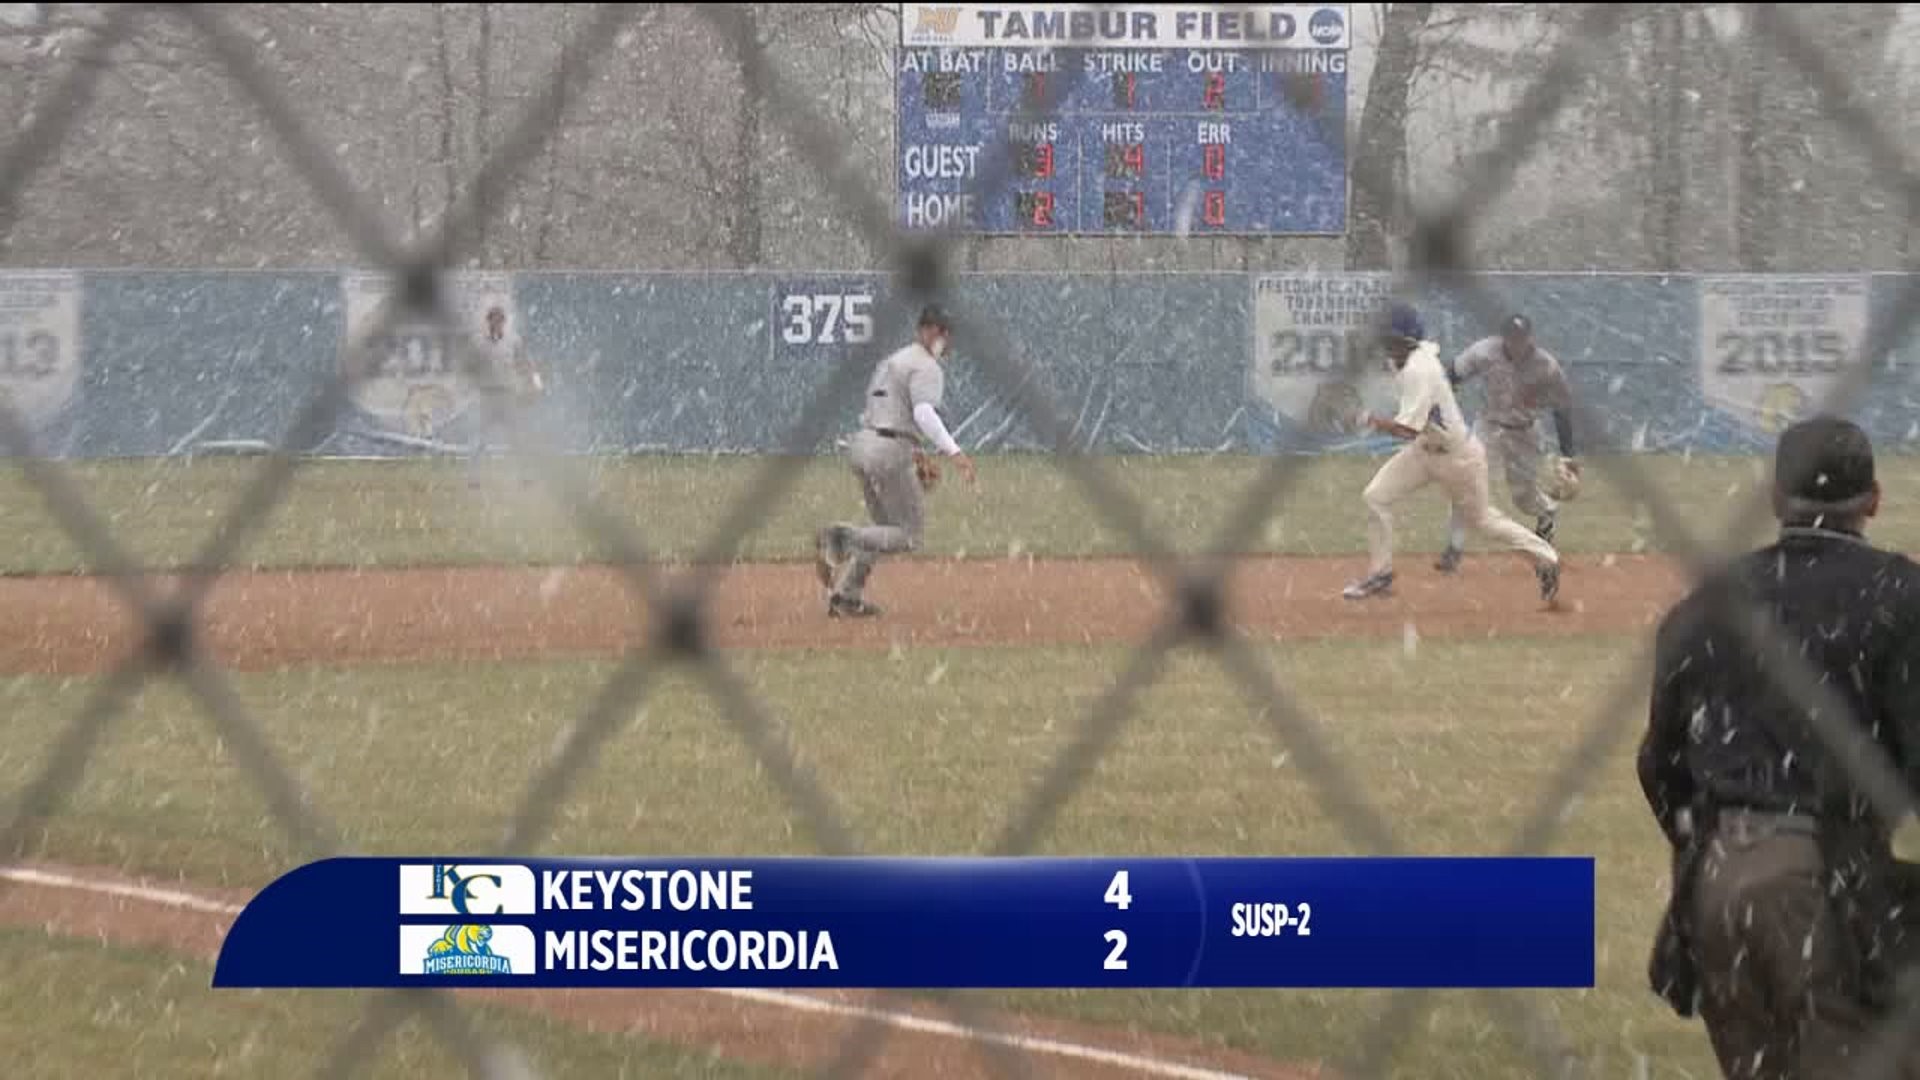 Keystone vs Misericordia baseball snow game